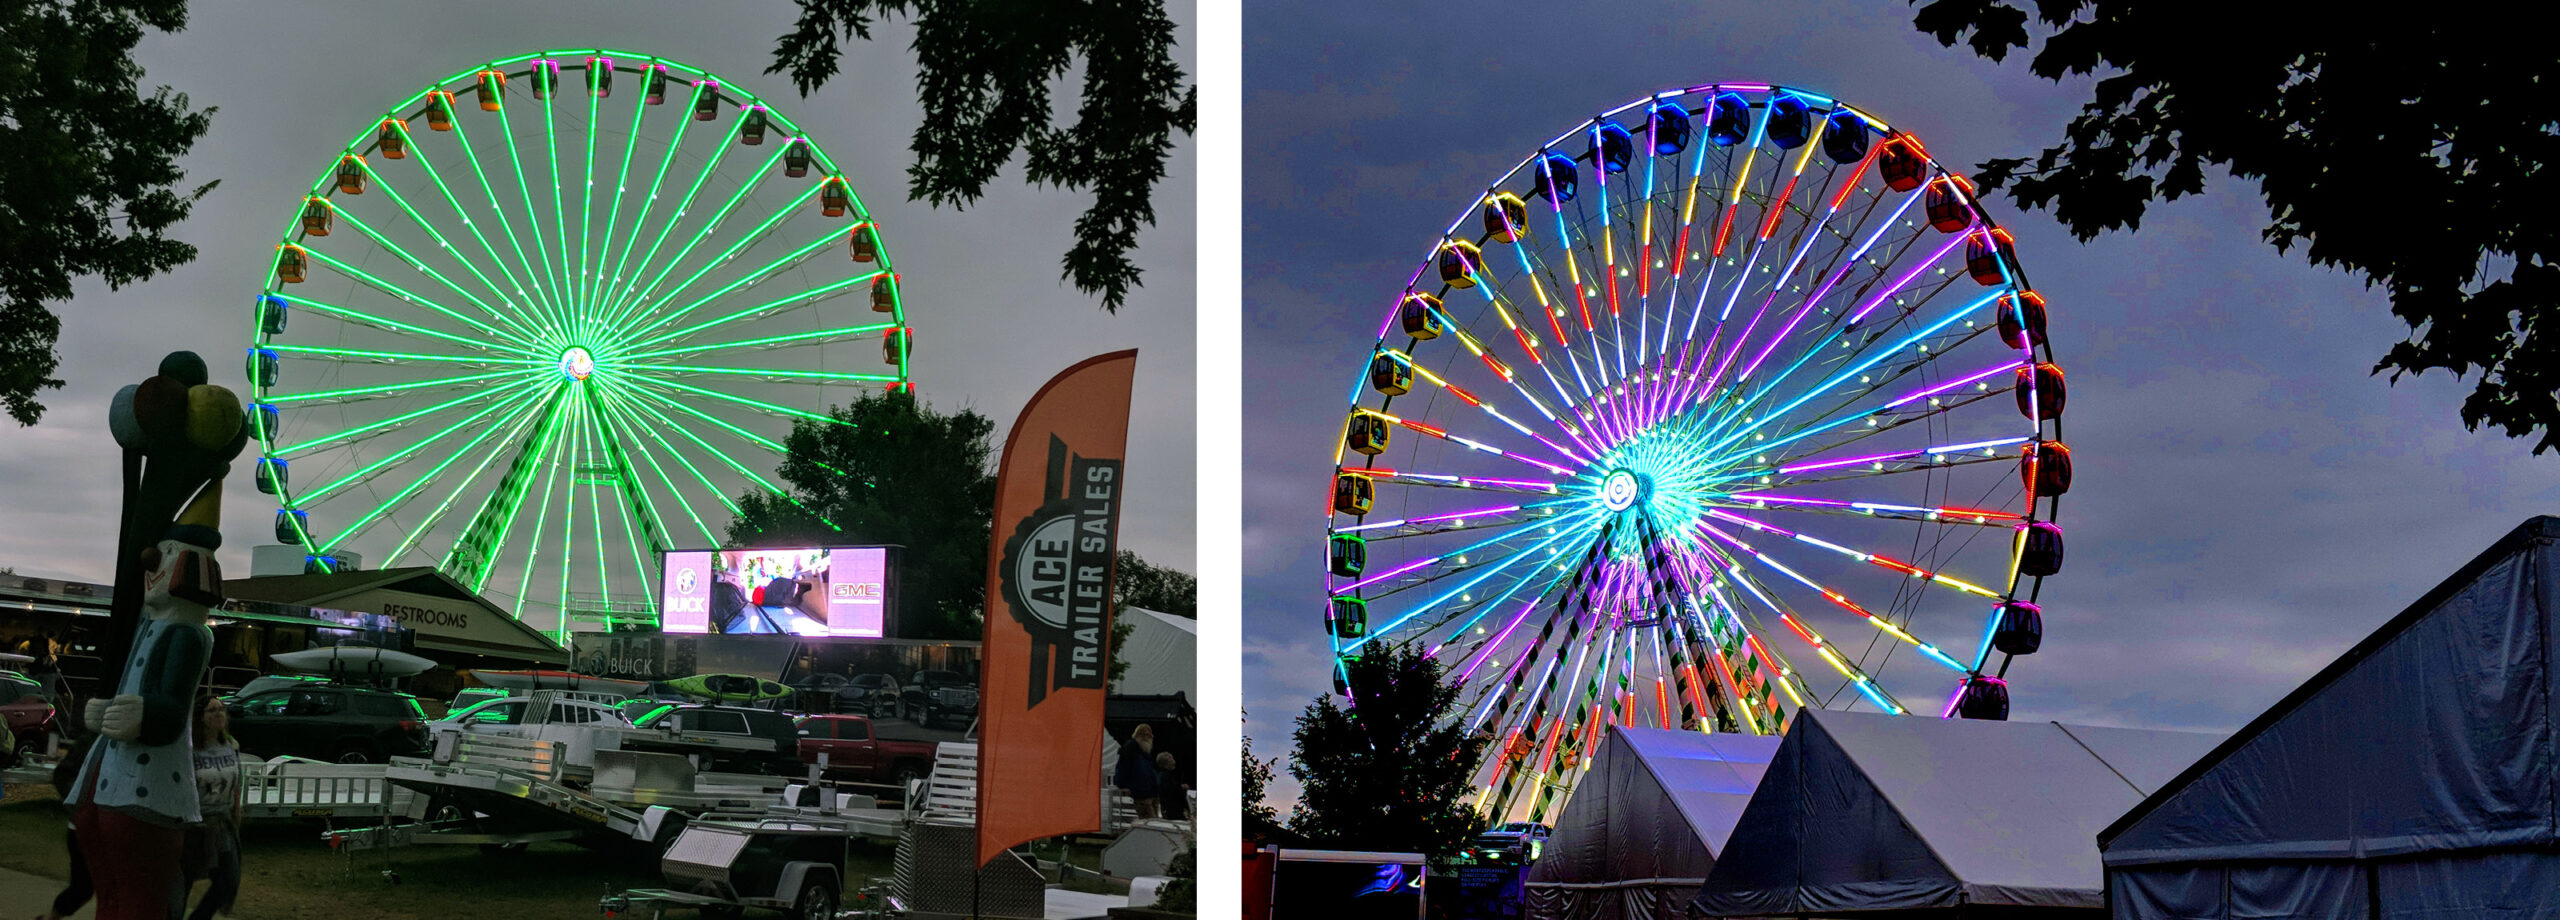 Ferris Wheel Minnesota State Fair